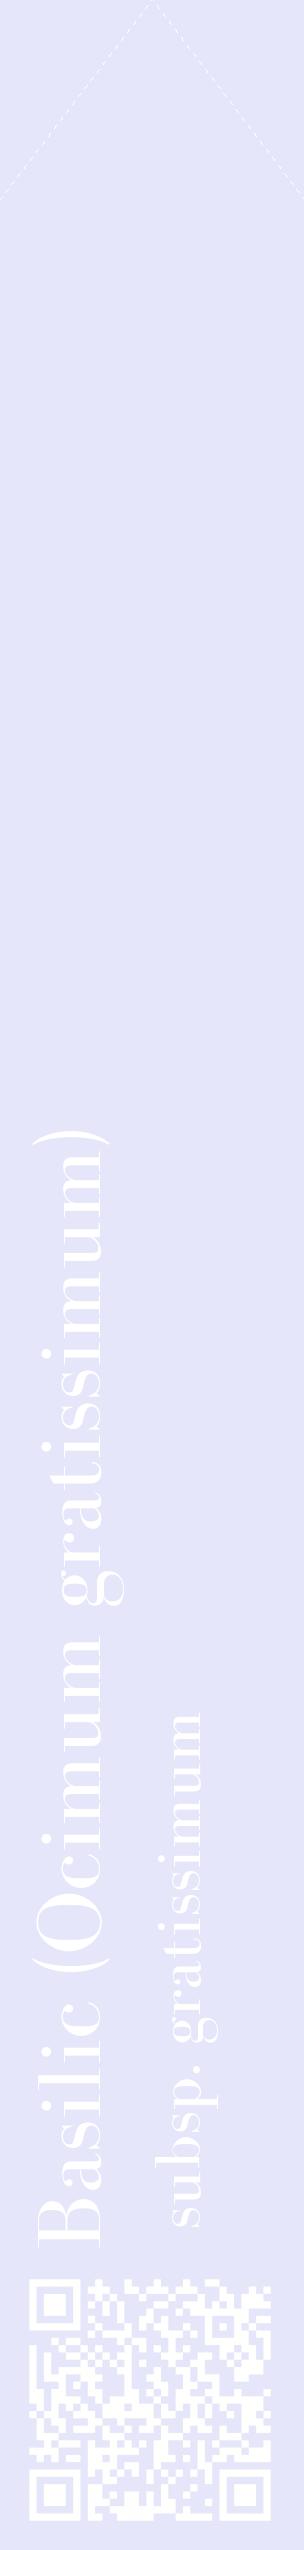 Étiquette de : Ocimum gratissimum subsp. gratissimum - format c - style blanche55_simplebod avec qrcode et comestibilité